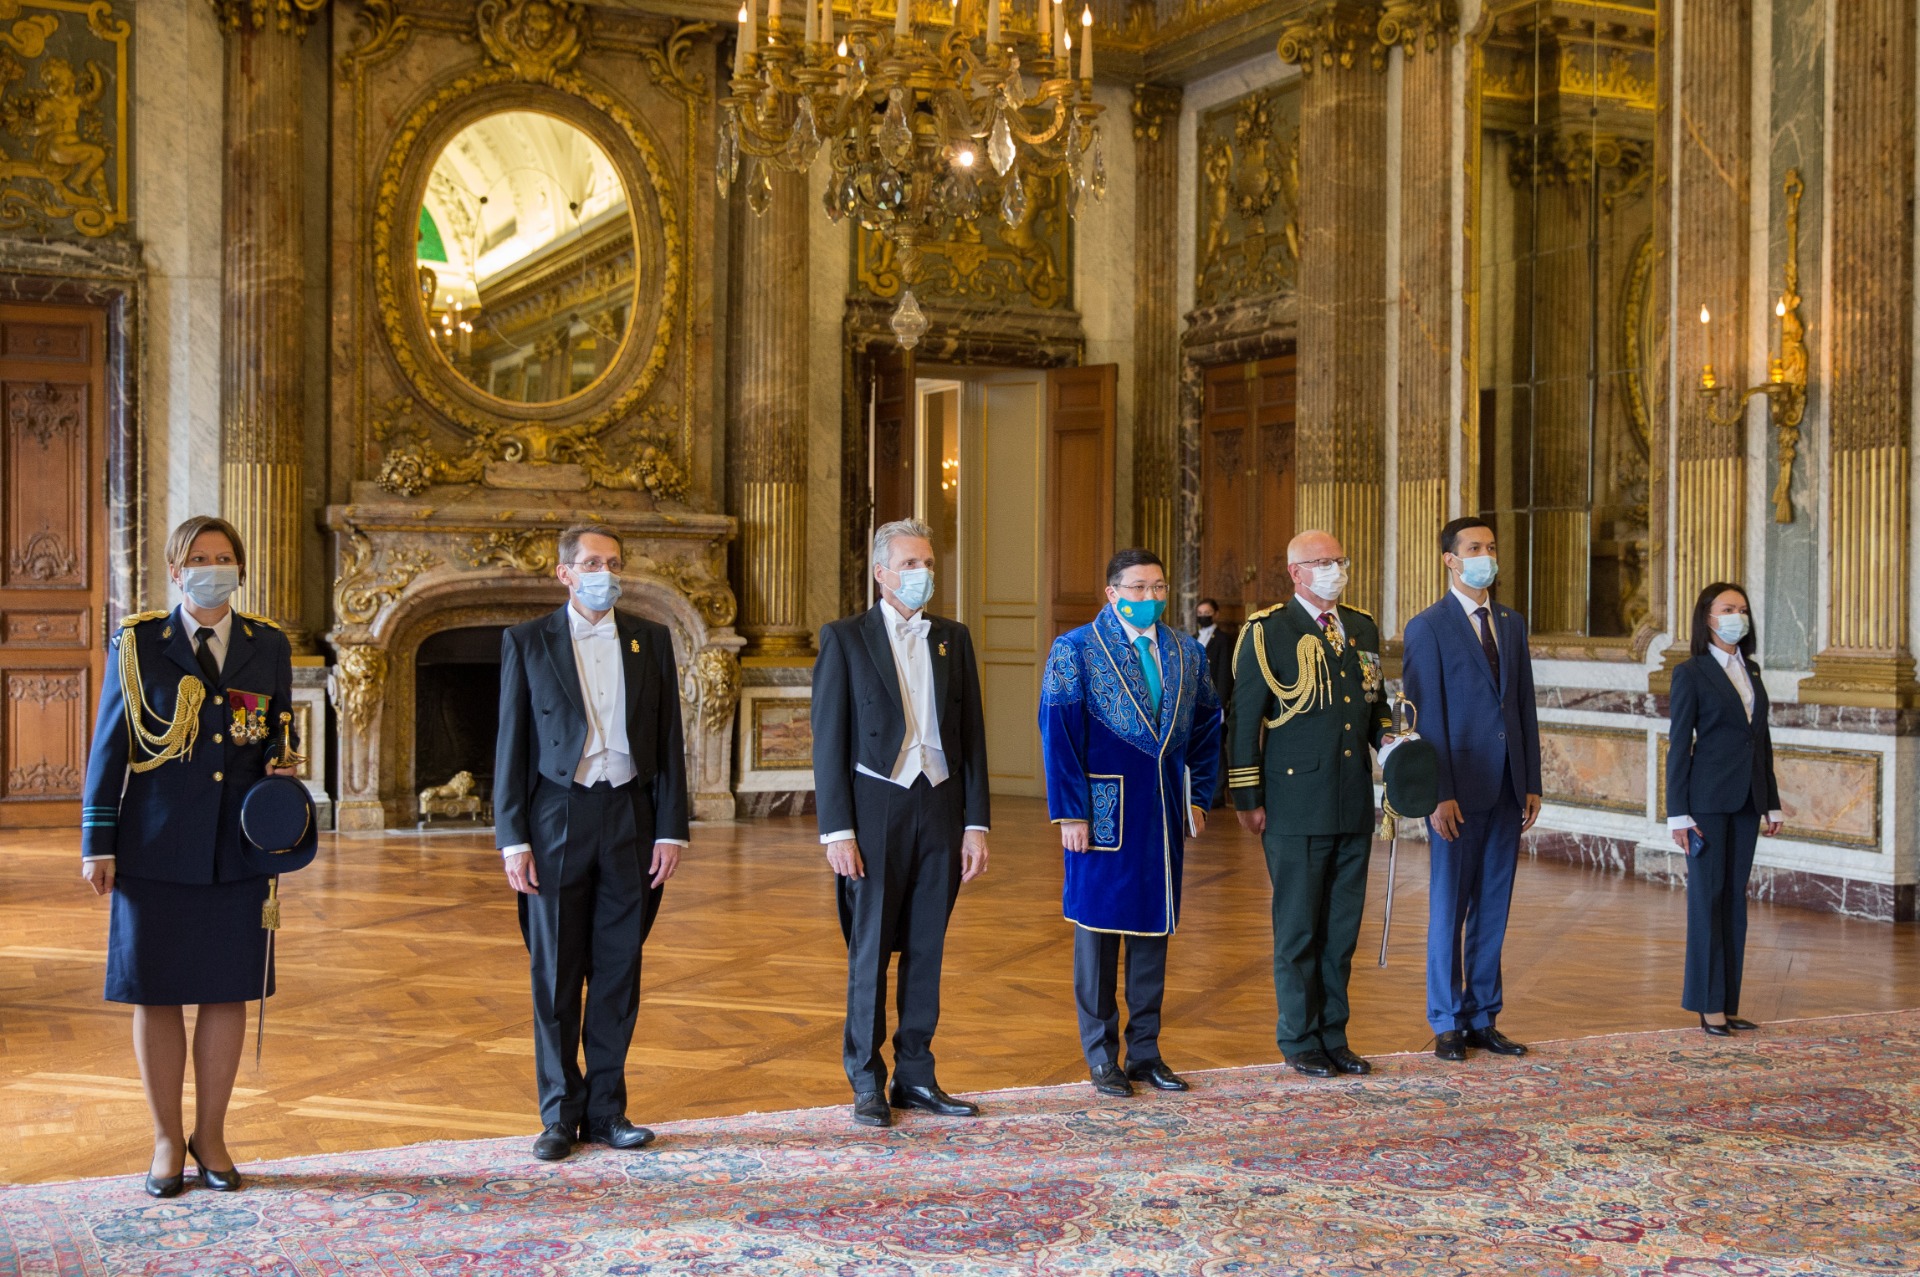 Ambassador of Kazakhstan presented his credentials to King Philippe of Belgium